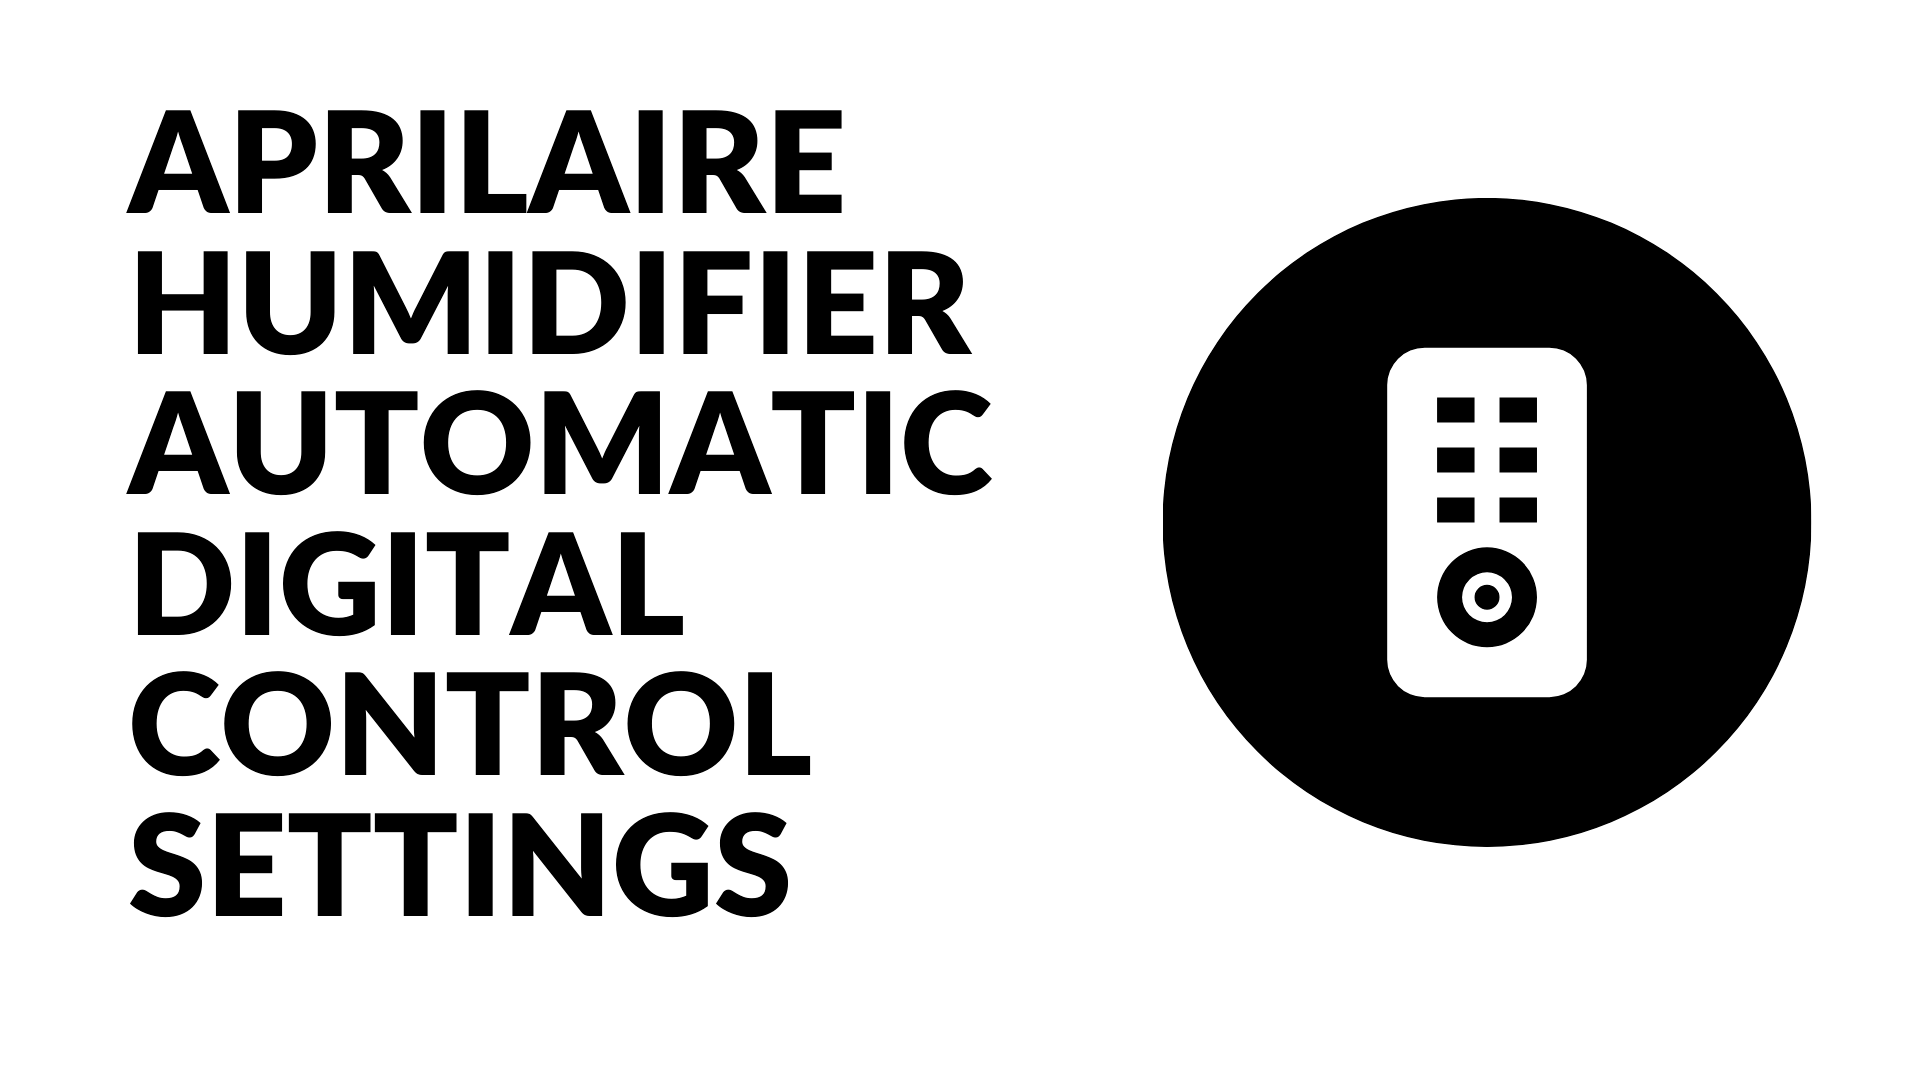 APRILAIRE HUMIDIFIER AUTOMATIC DIGITAL CONTROL SETTINGS